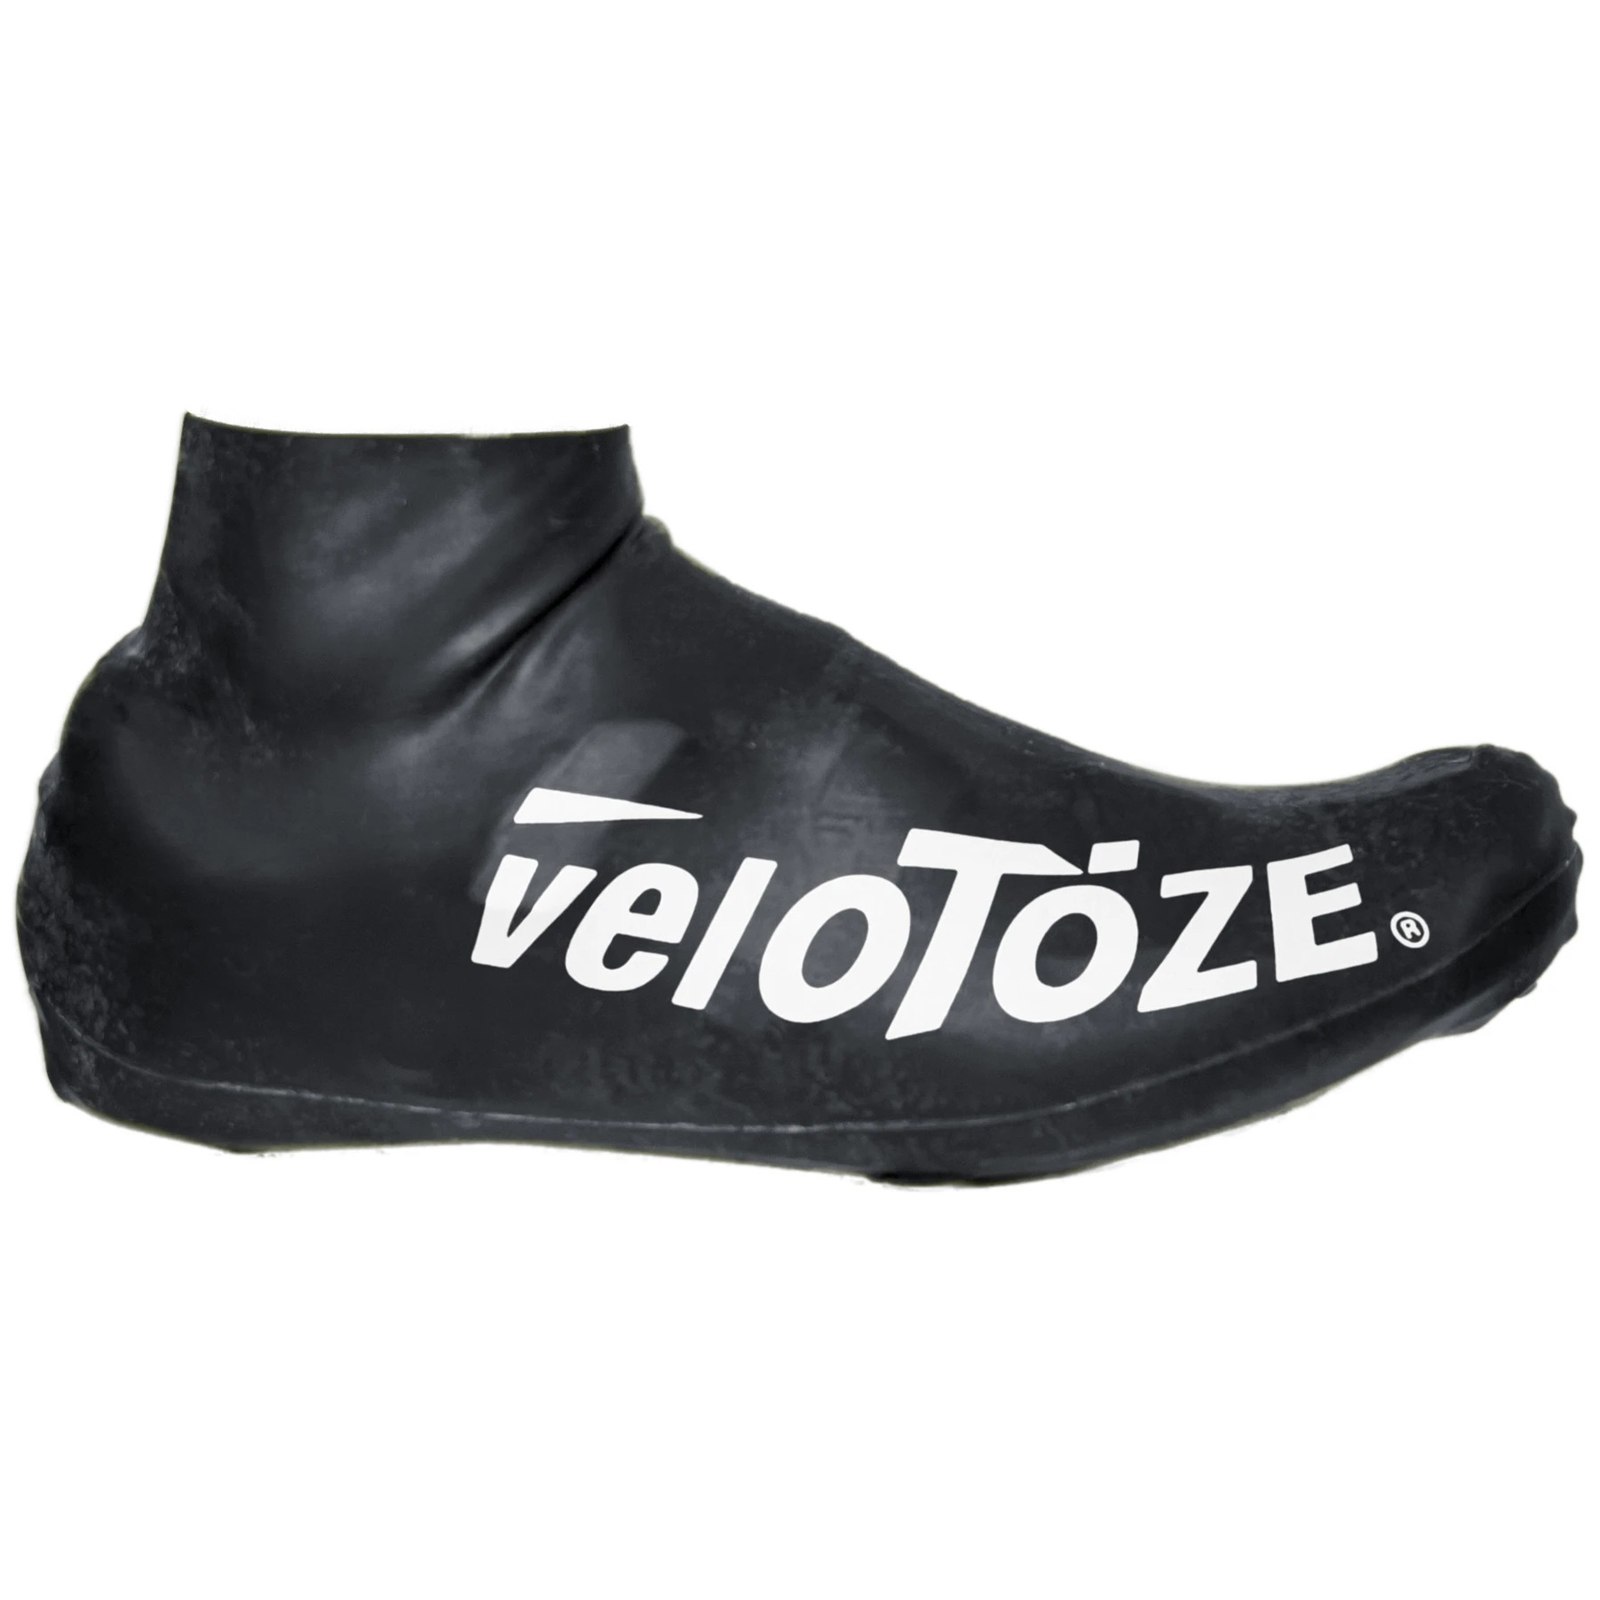 Productfoto van veloToze Short Shoe Cover Road 2.0 - black